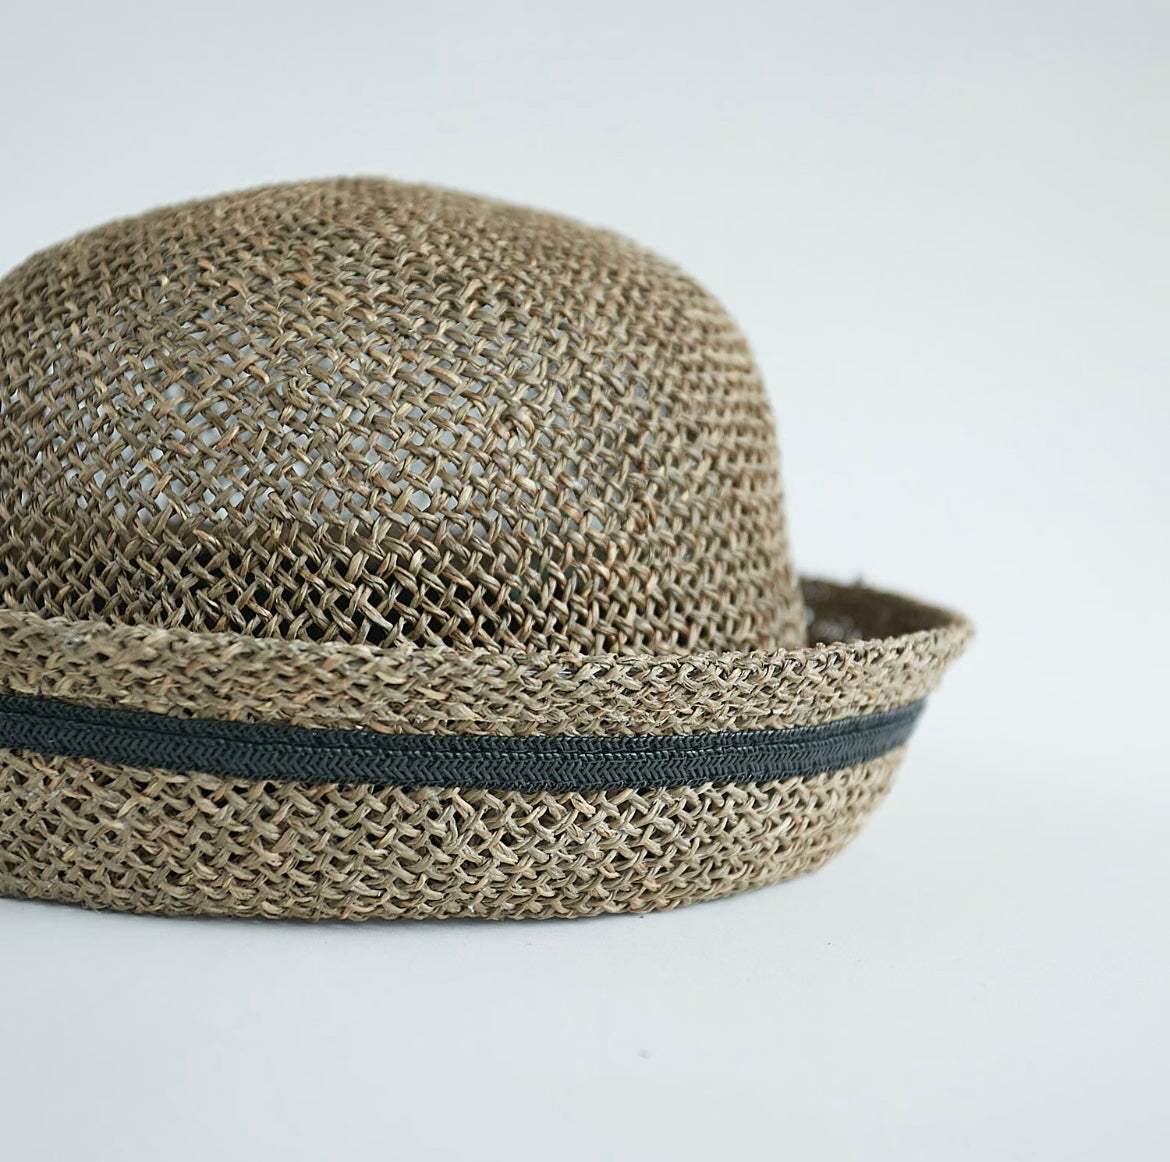 Kopitto straw hat